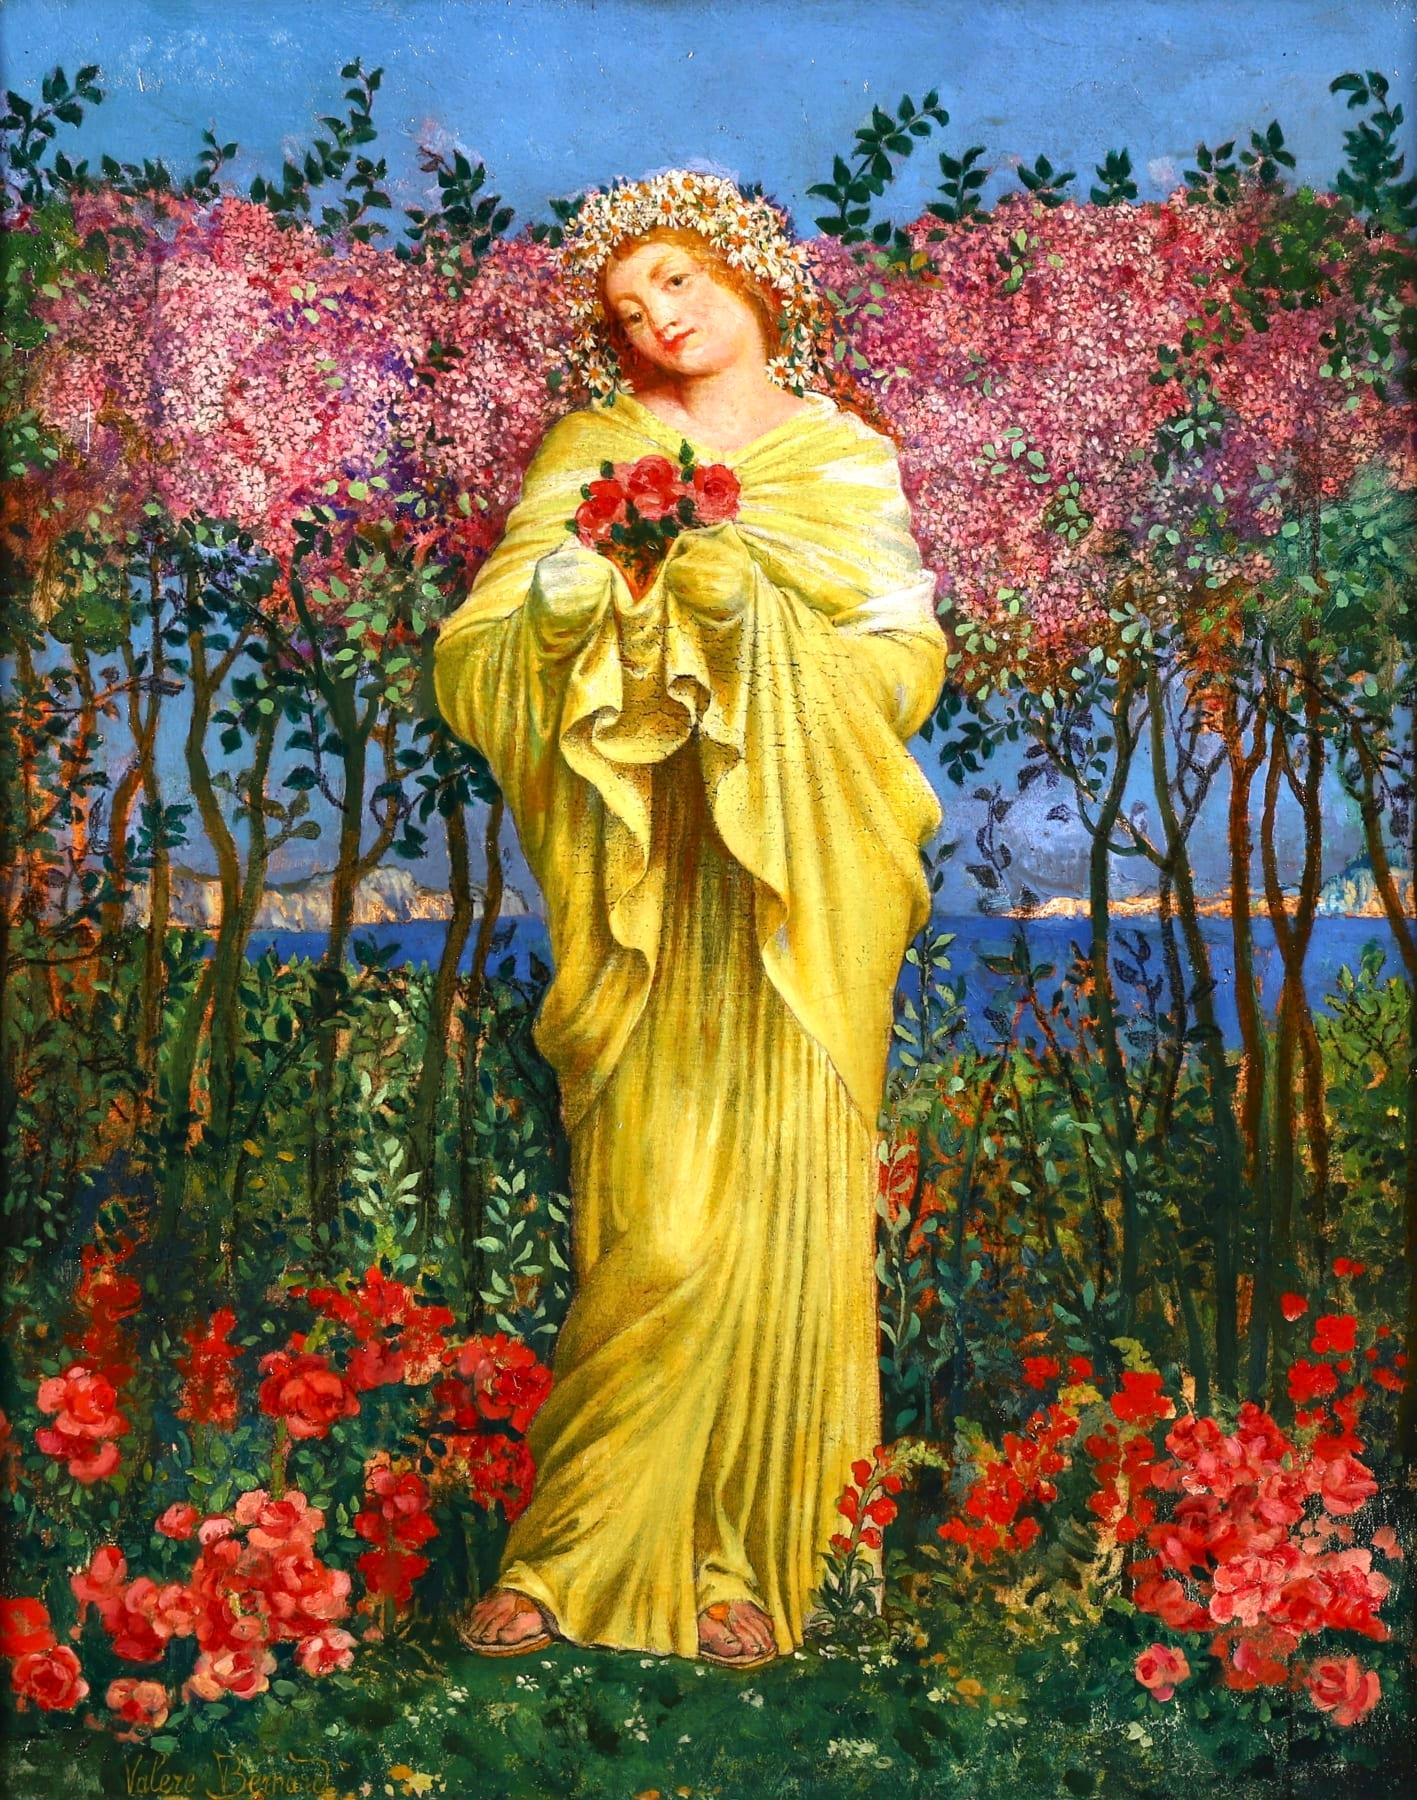 Francois Marius Valere-Bernard Portrait Painting - Picking Flowers - Symbolist Oil, Portrait of Woman in Landscape - Valere-Bernard